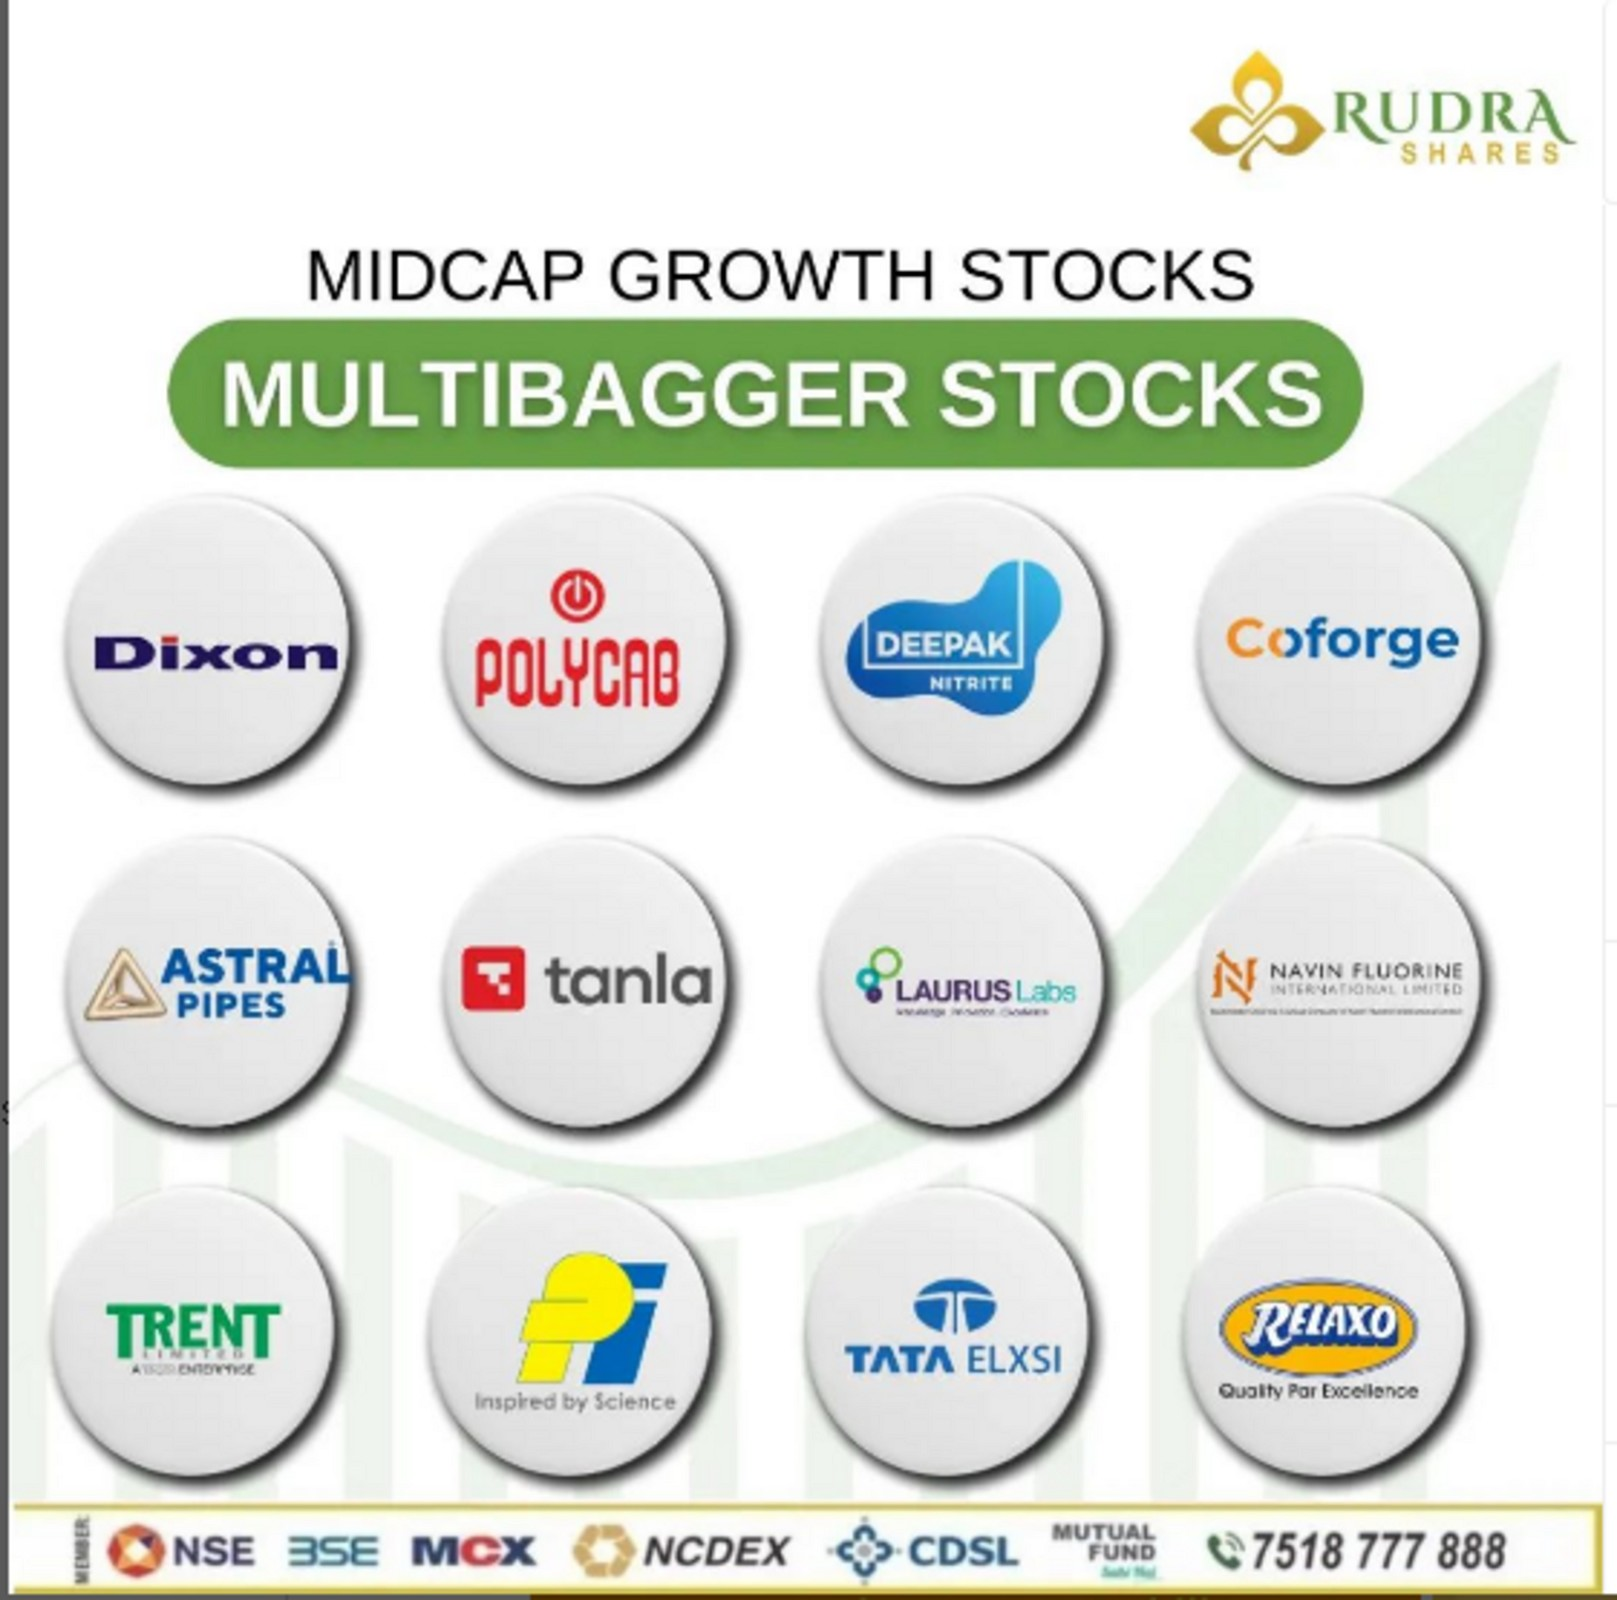 MIDCAP GROWTH STOCKS